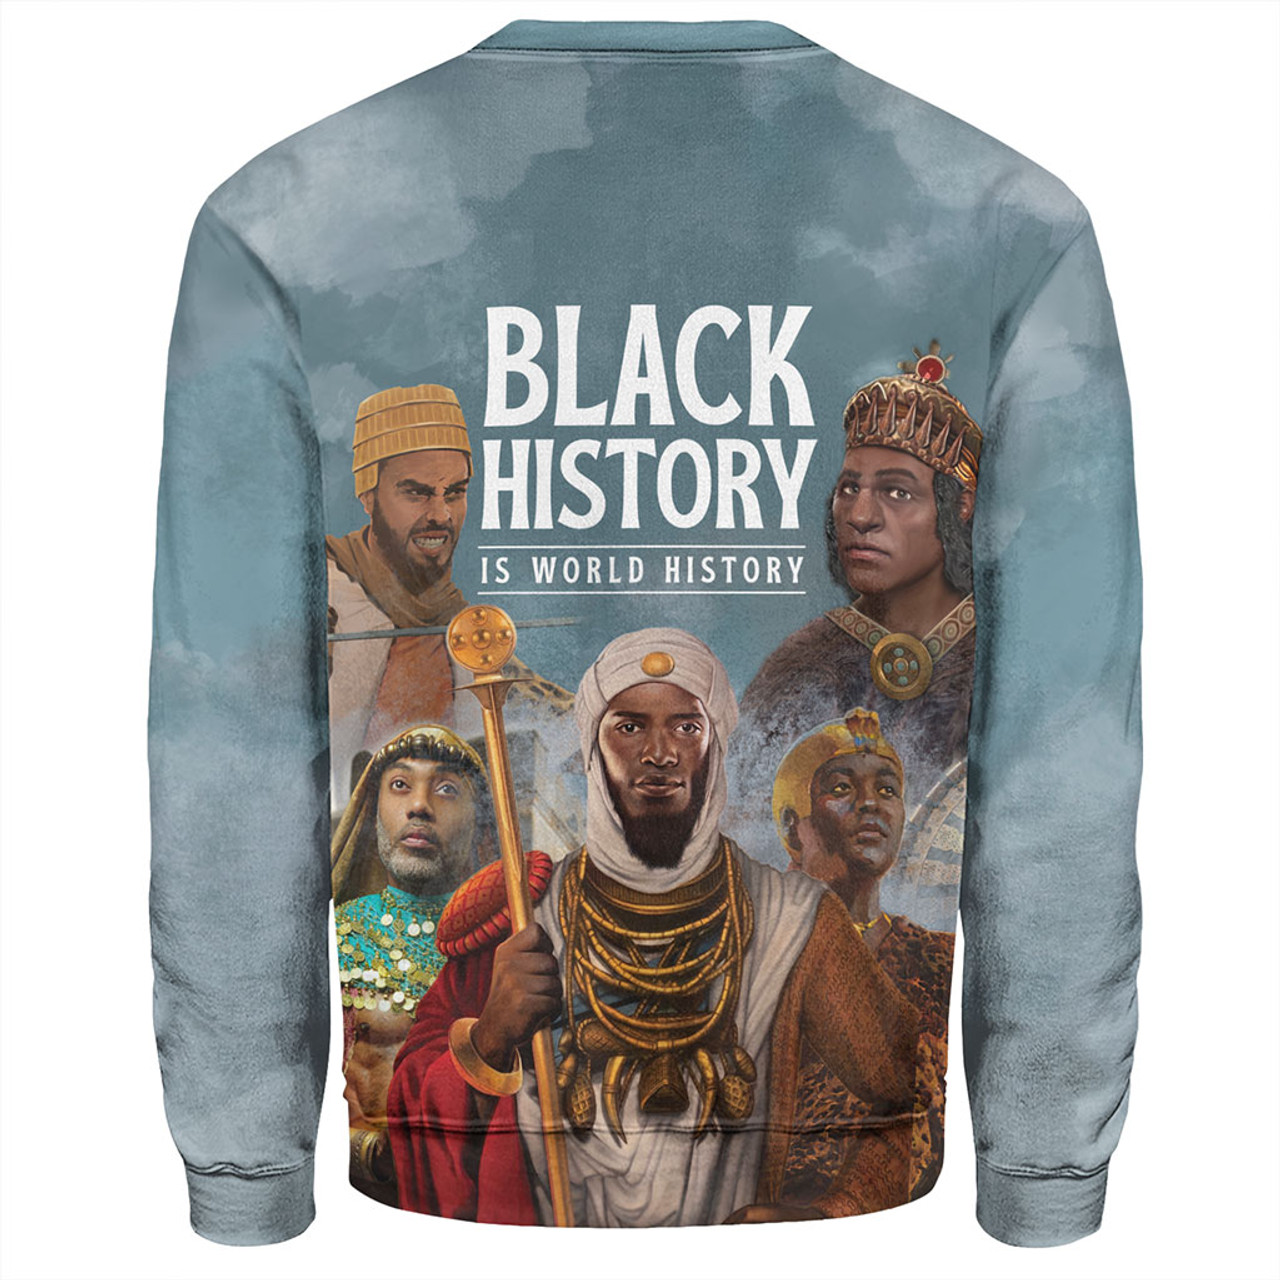 Black History Sweatshirt Is World History